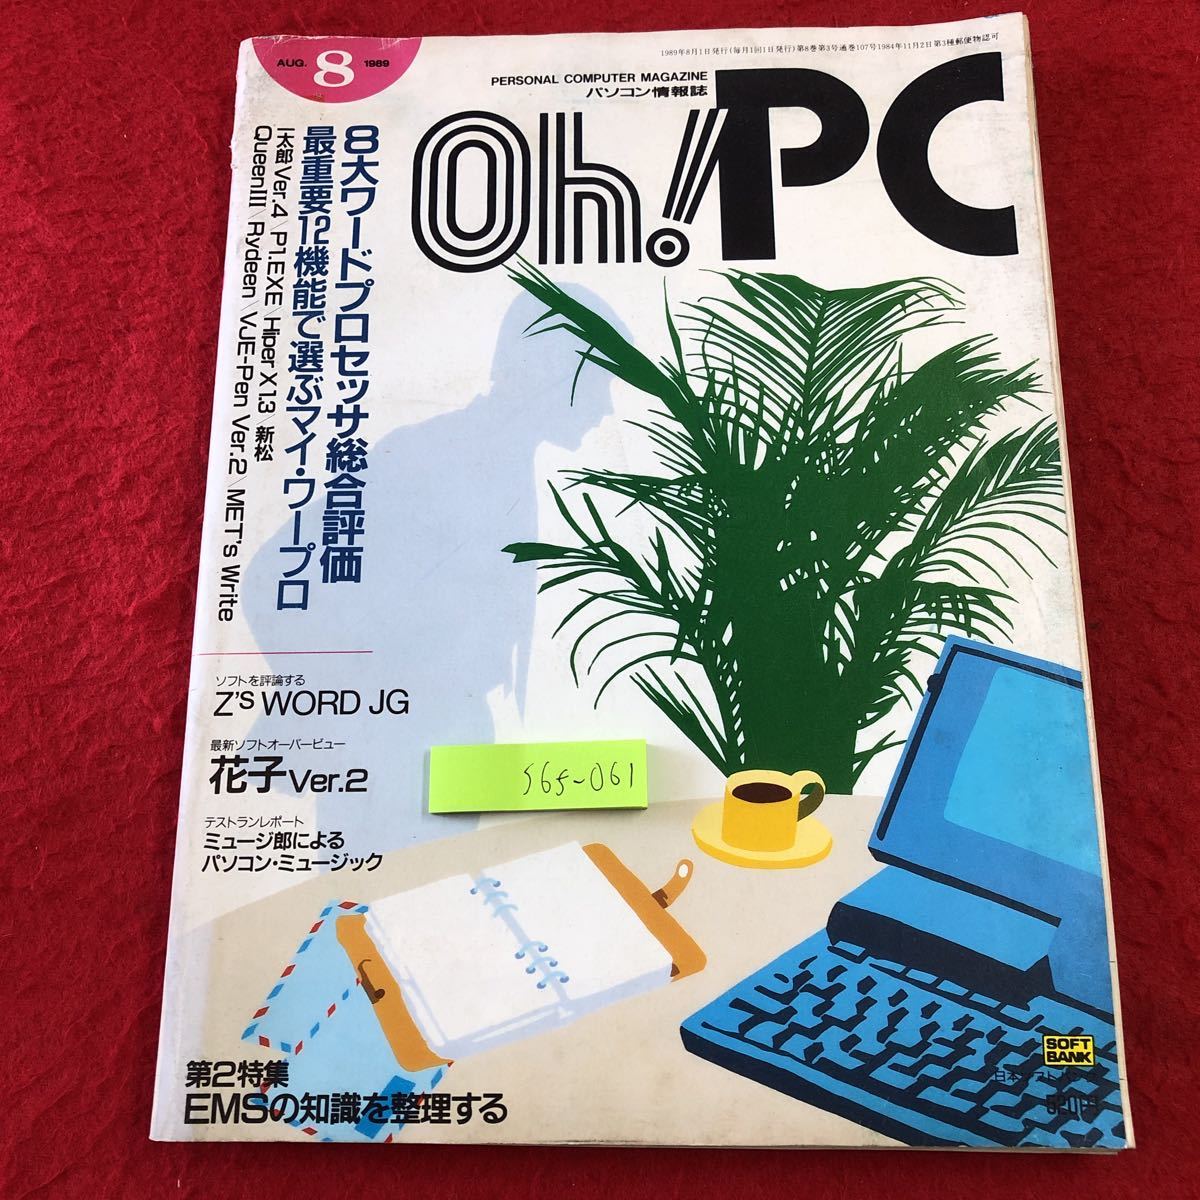 S6f-061 Oh!PC パソコン情報誌 1989年8月号 8大ワードプロセッサ総合評価 1989年8月1日 発行 日本ソフトバンク 雑誌 パソコン ソフトウェア_表紙に折りあり